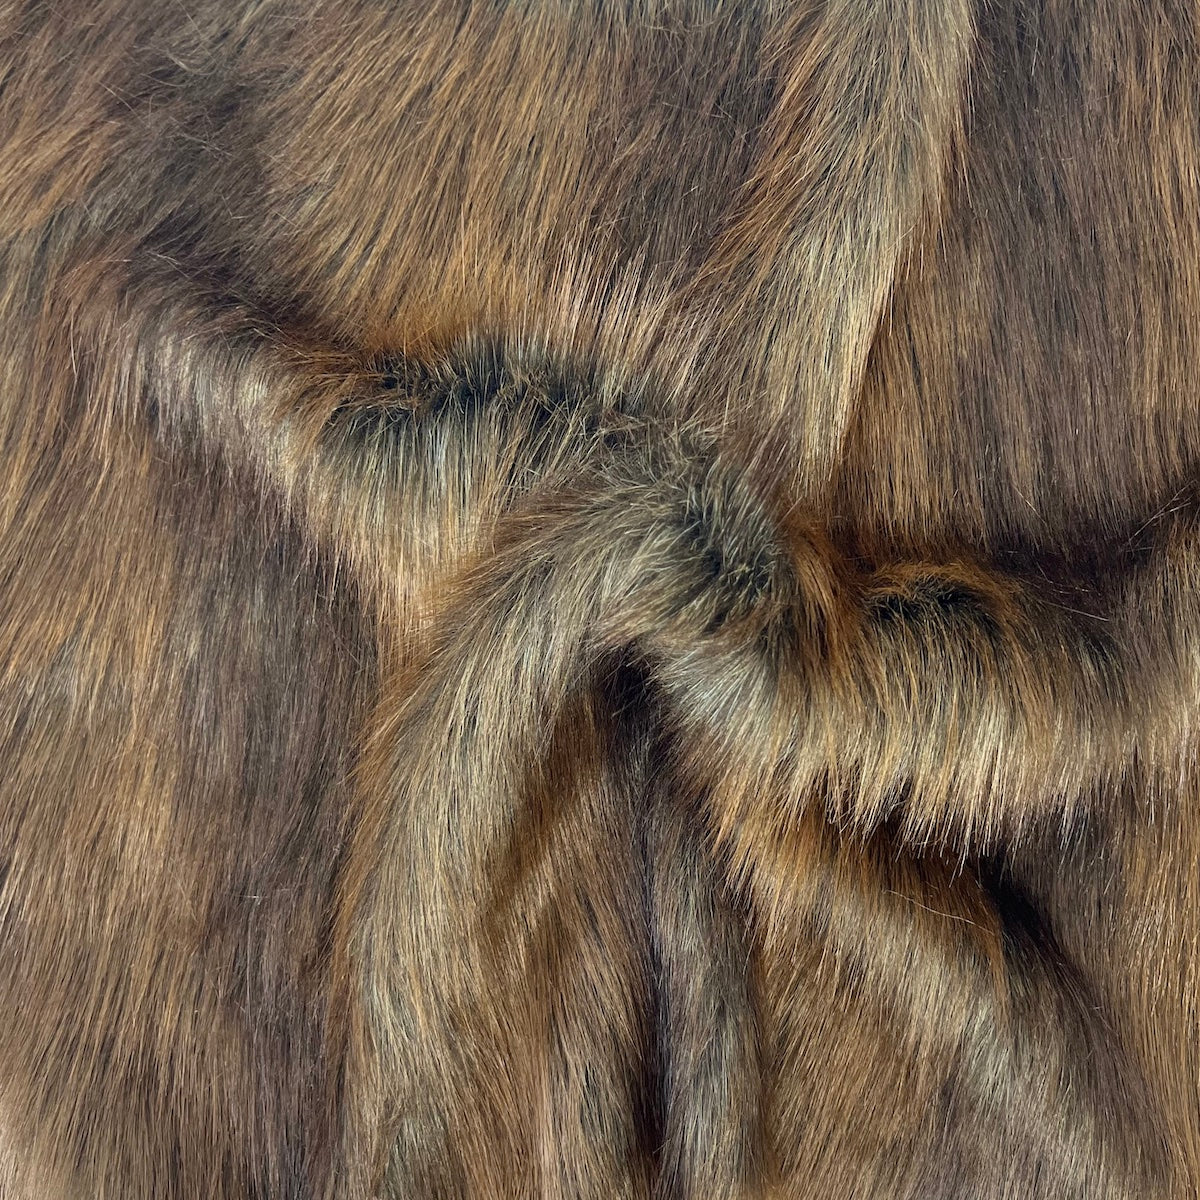 Marrón | Tela de piel sintética de lobo a rayas color caramelo